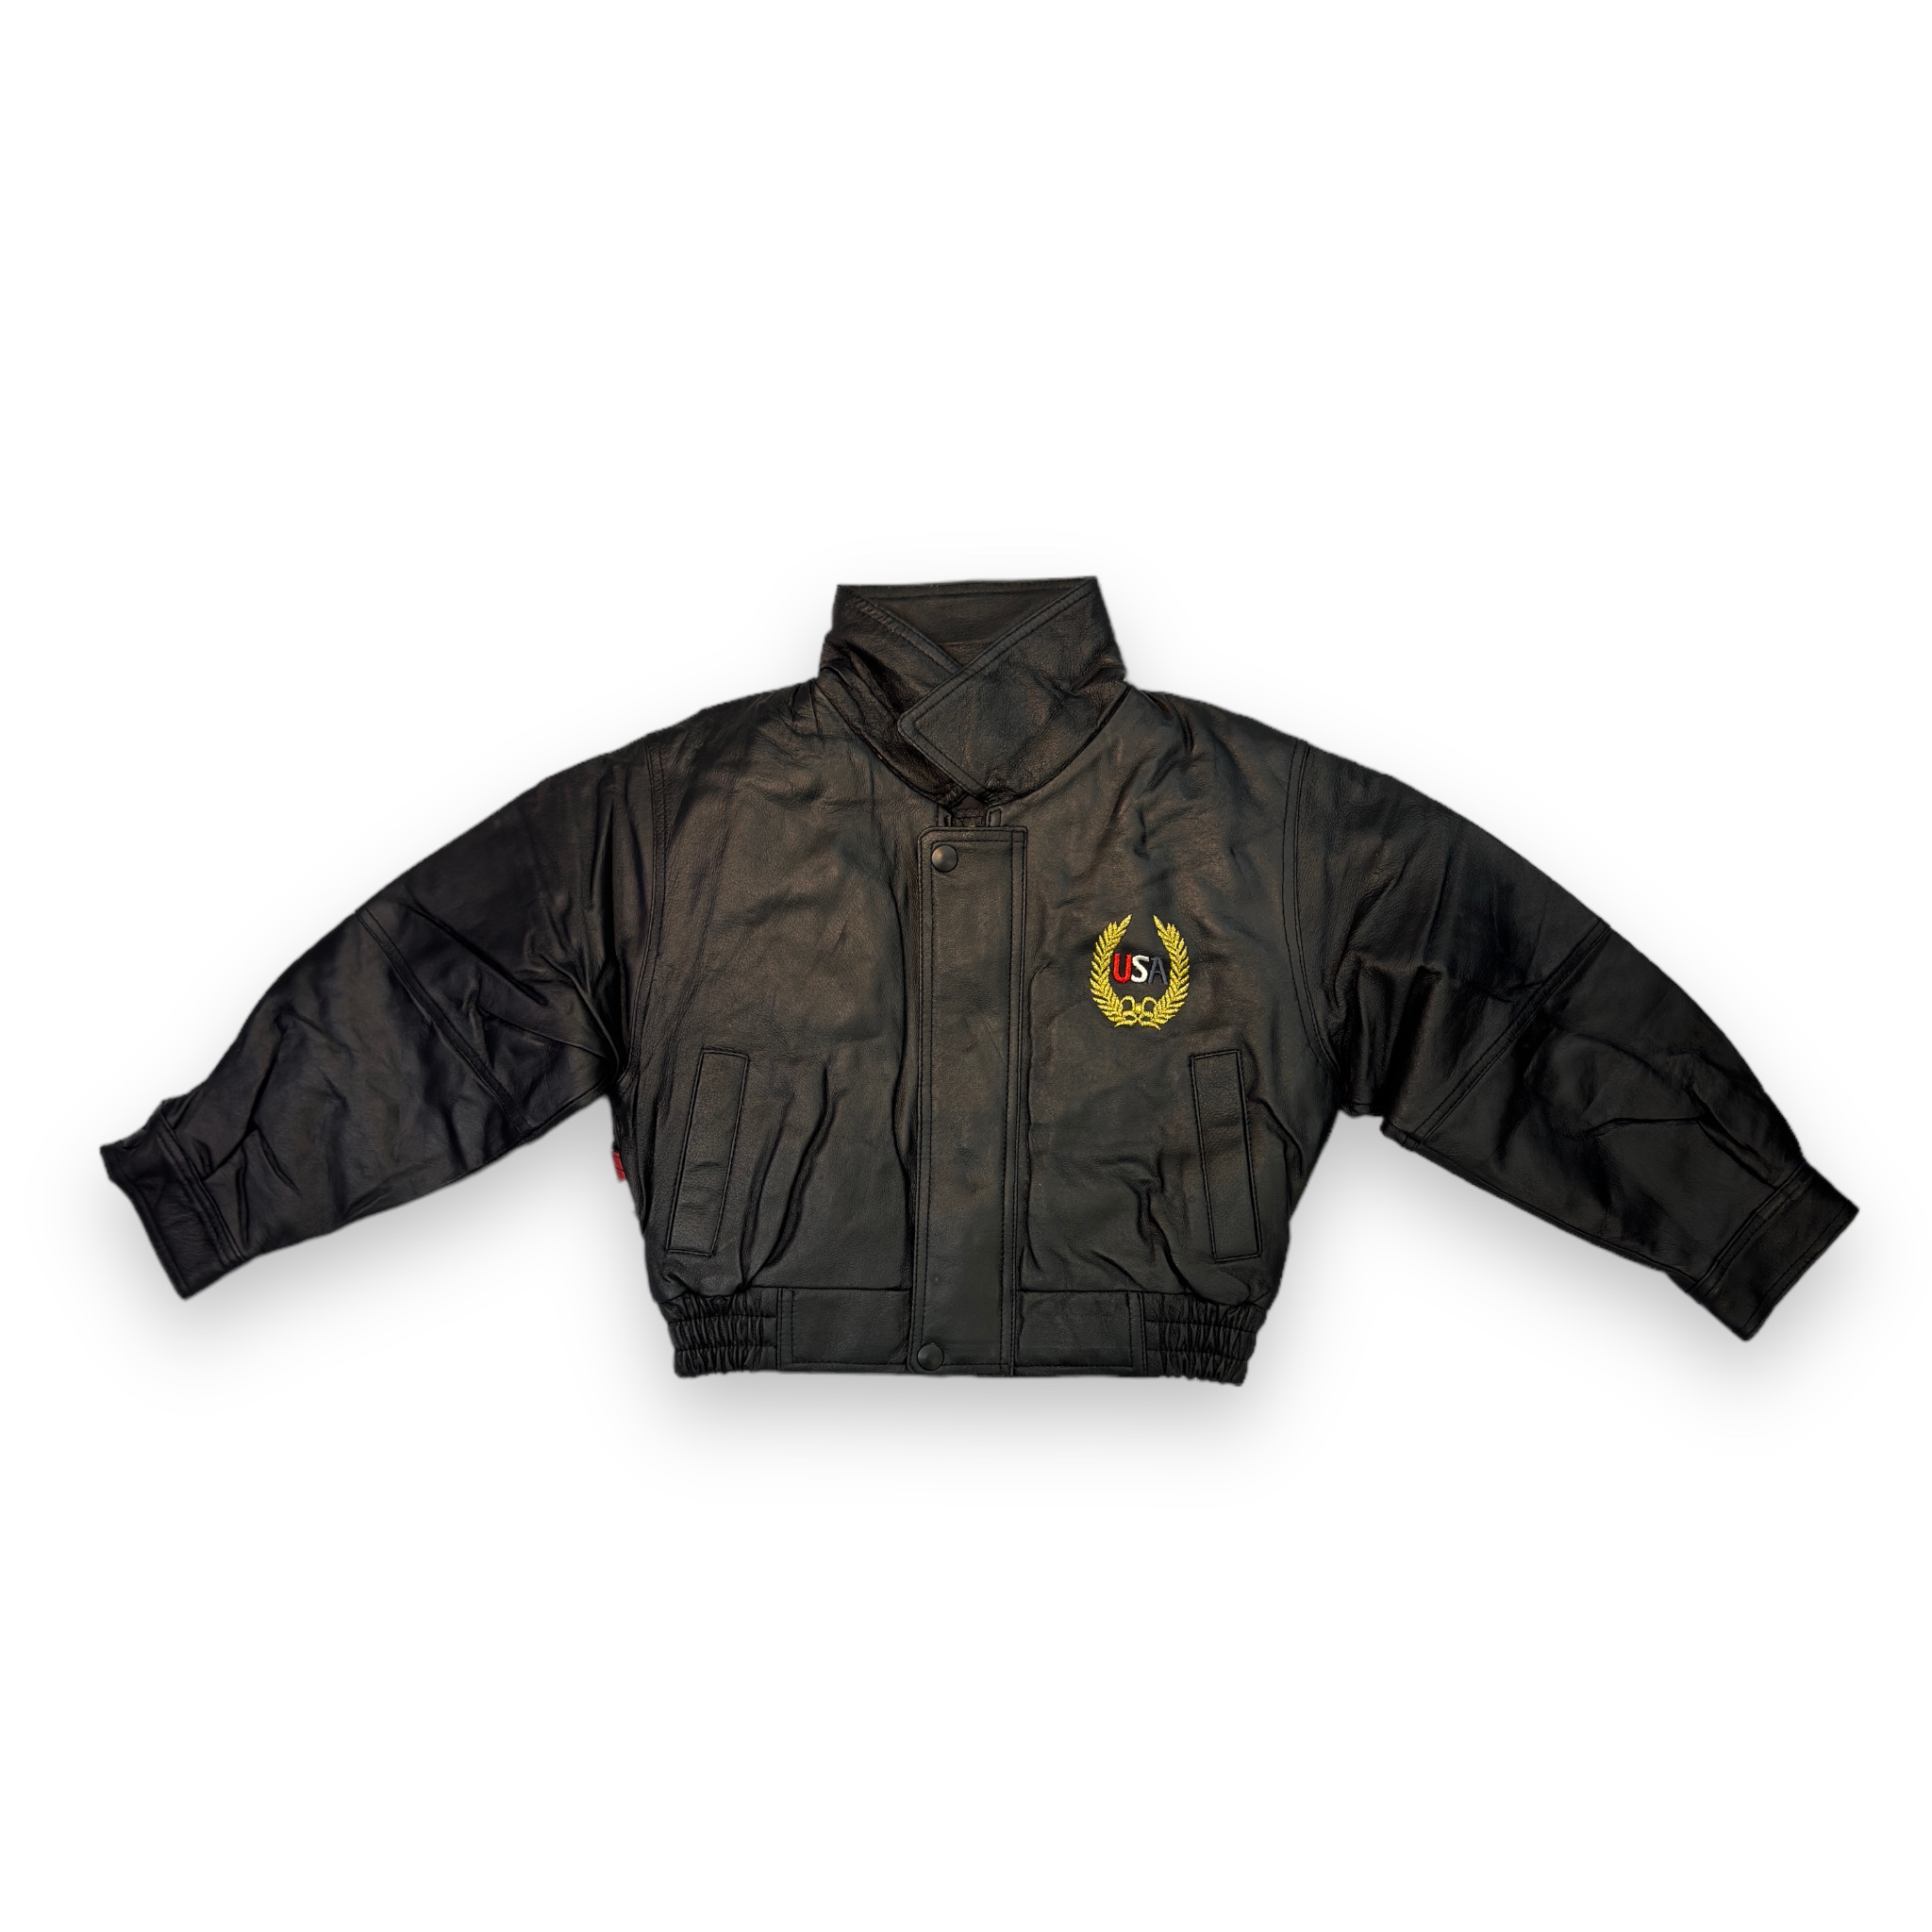 Black USA Leather Jacket - Daniel's Leather